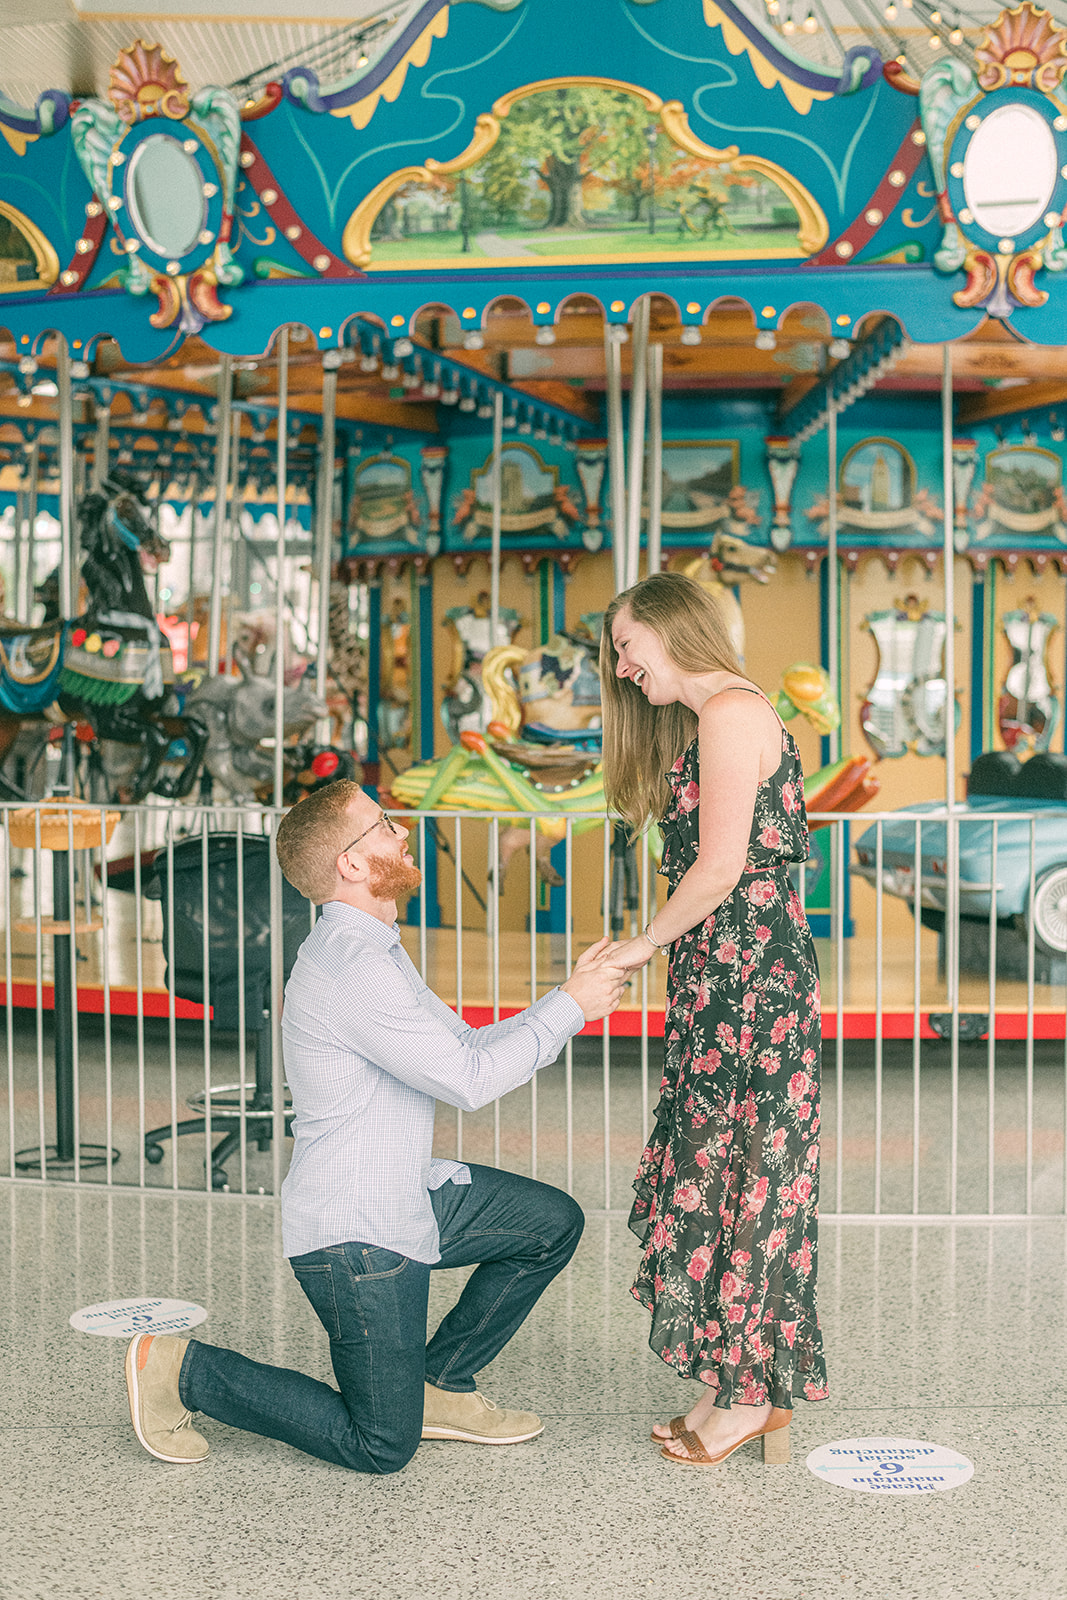 Proposal at Caron Ann's Carousel